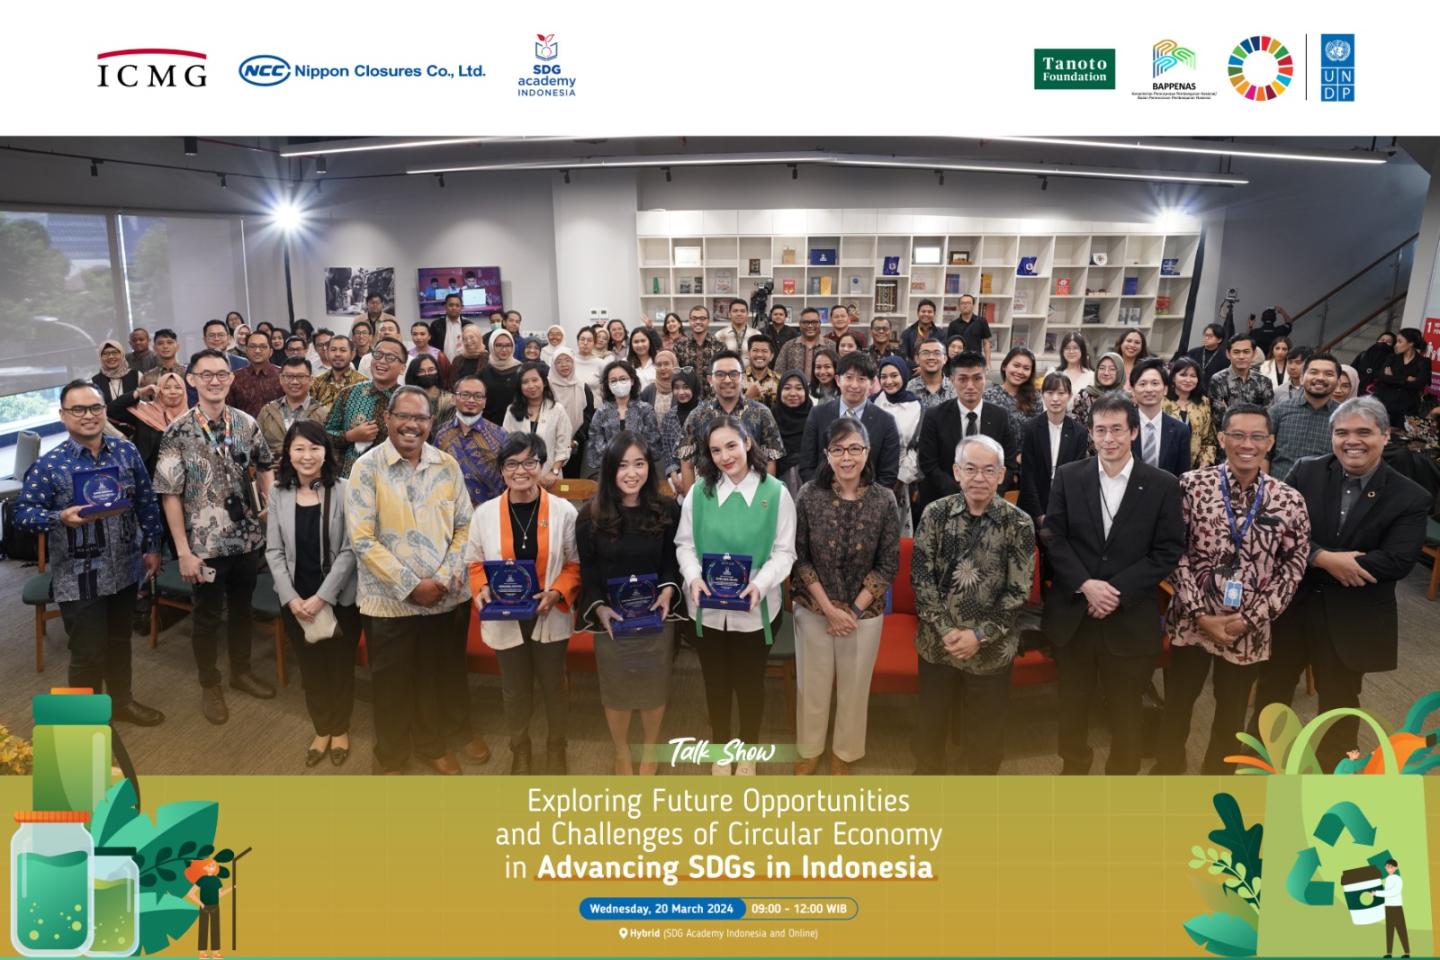 Peningkatan Kapasitas Ekonomi Sirkular: Kolaborasi Indonesia dan Jepang melalui SDG Academy Indonesia